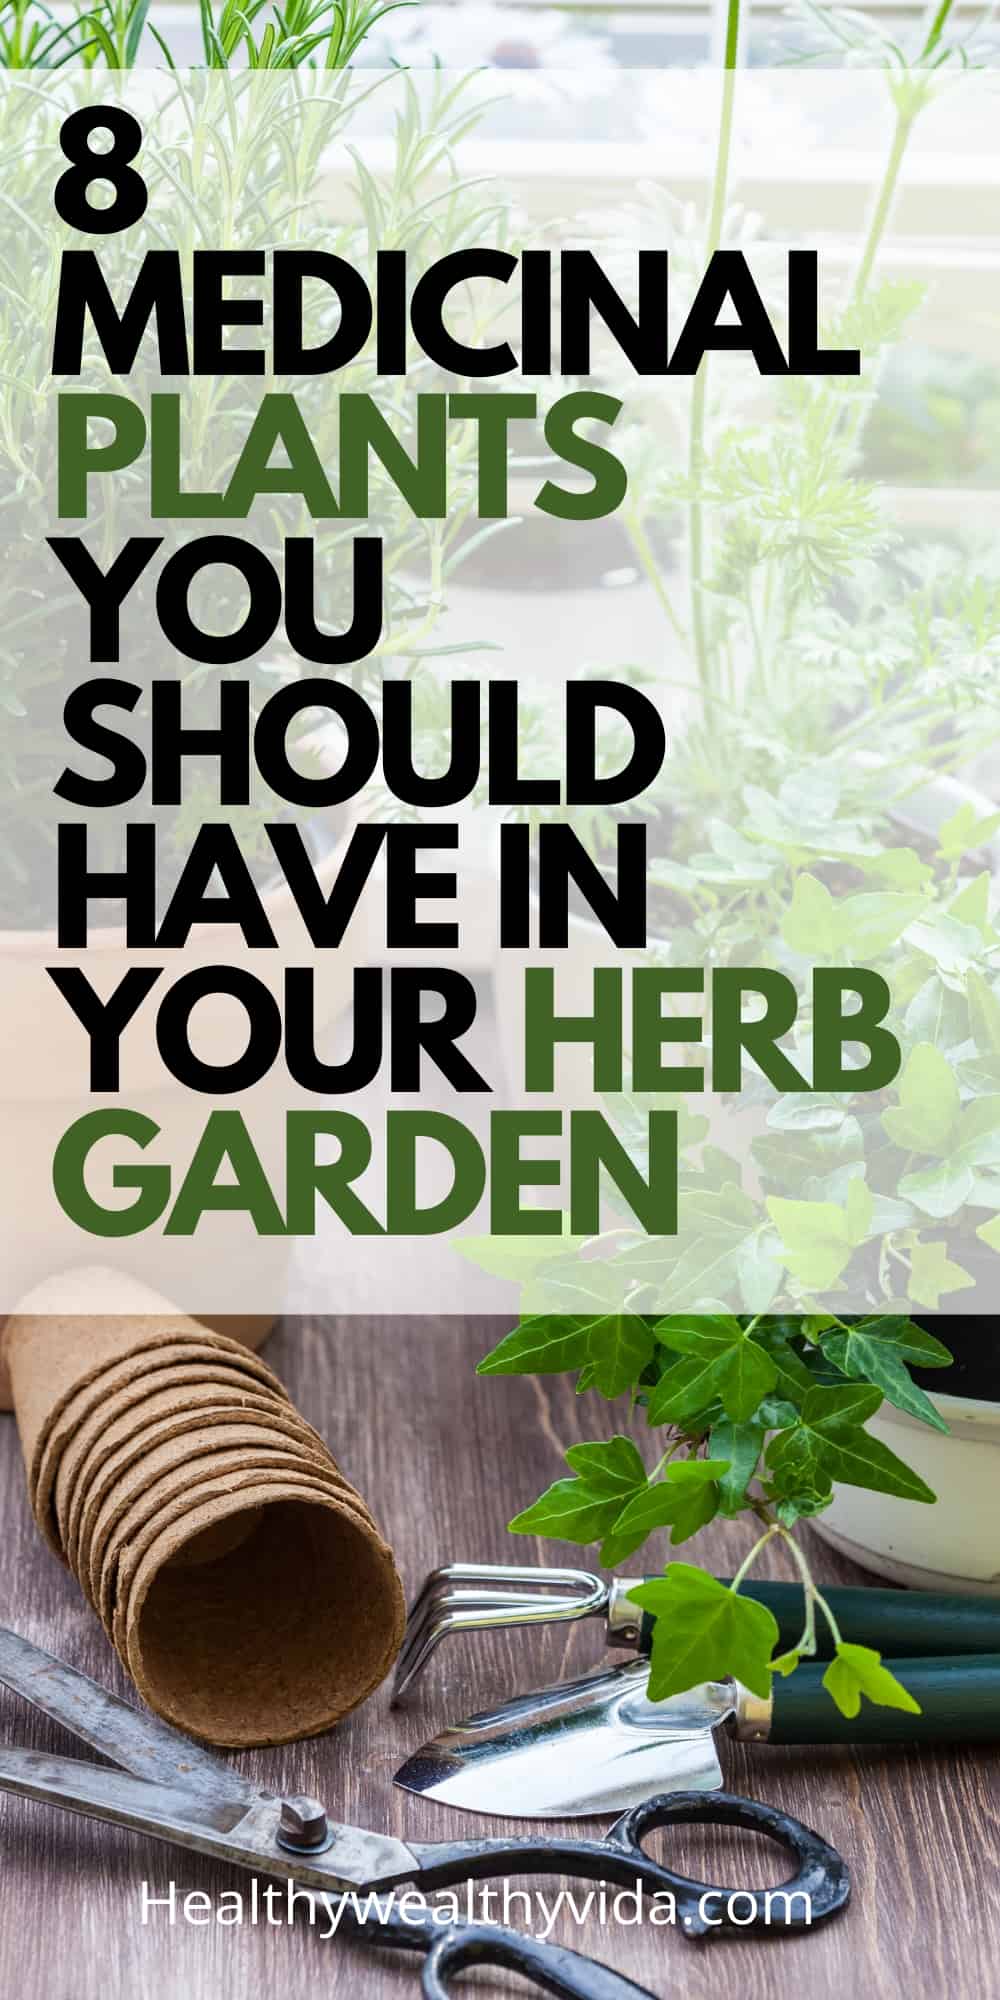 Medicinal Plants For Herb Garden